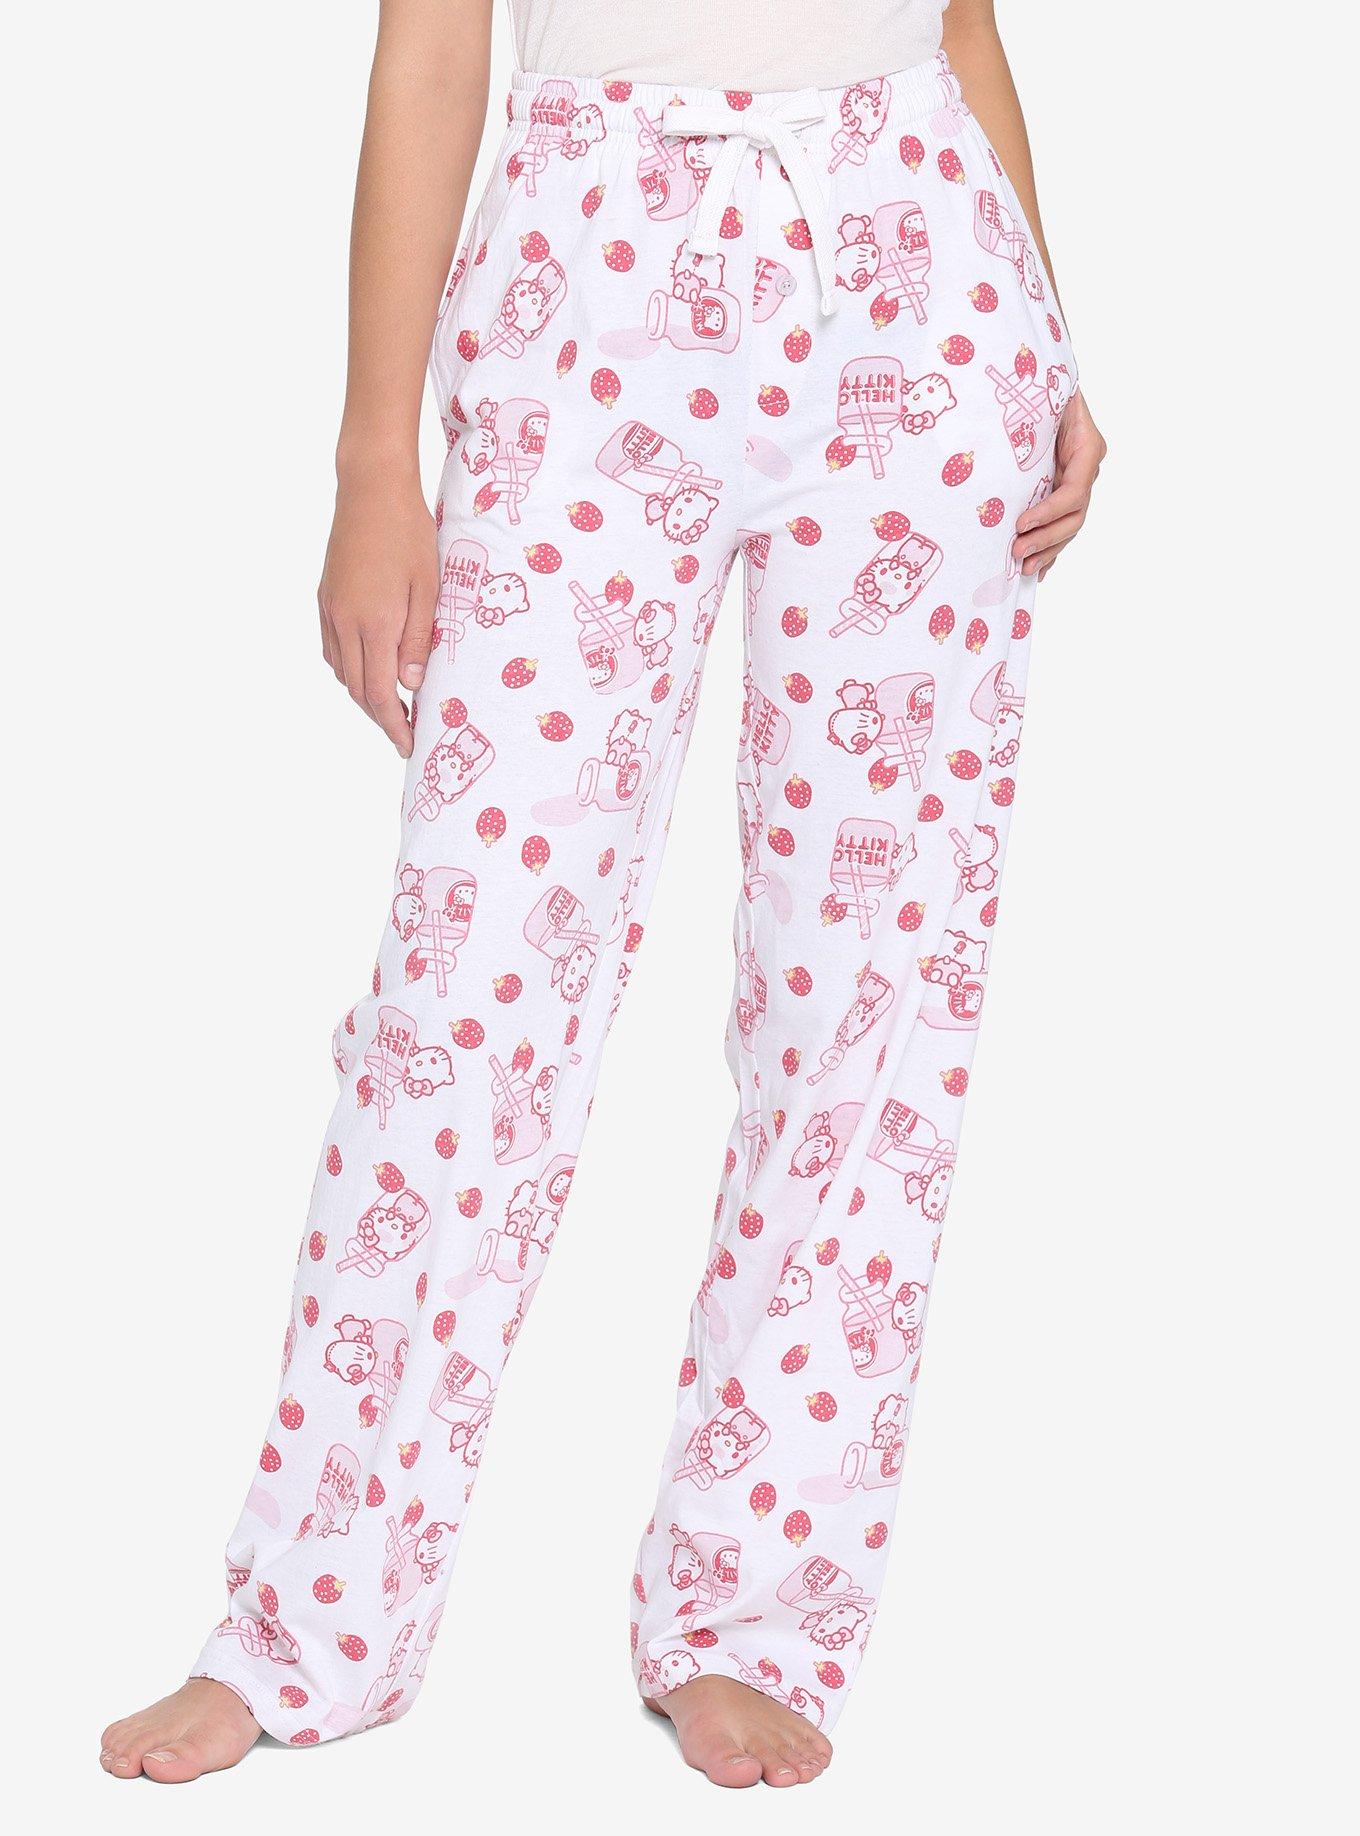 Hello Kitty PJ Pants  Hello kitty clothes, Cute pajama sets, Cute